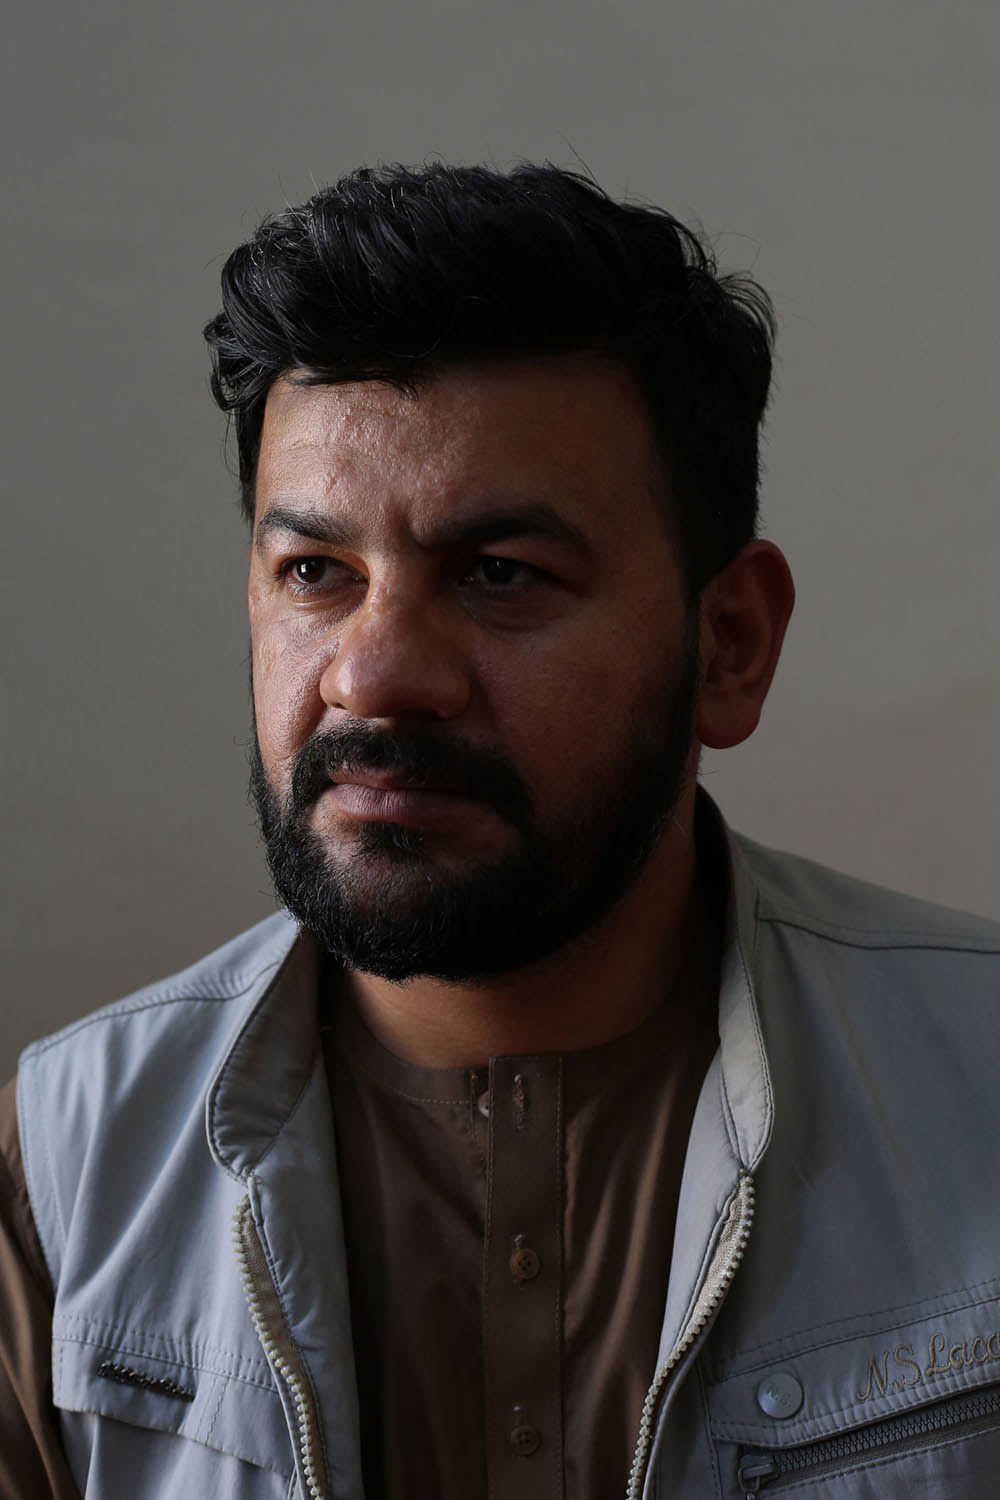 Afghan doctor Abdul Sami